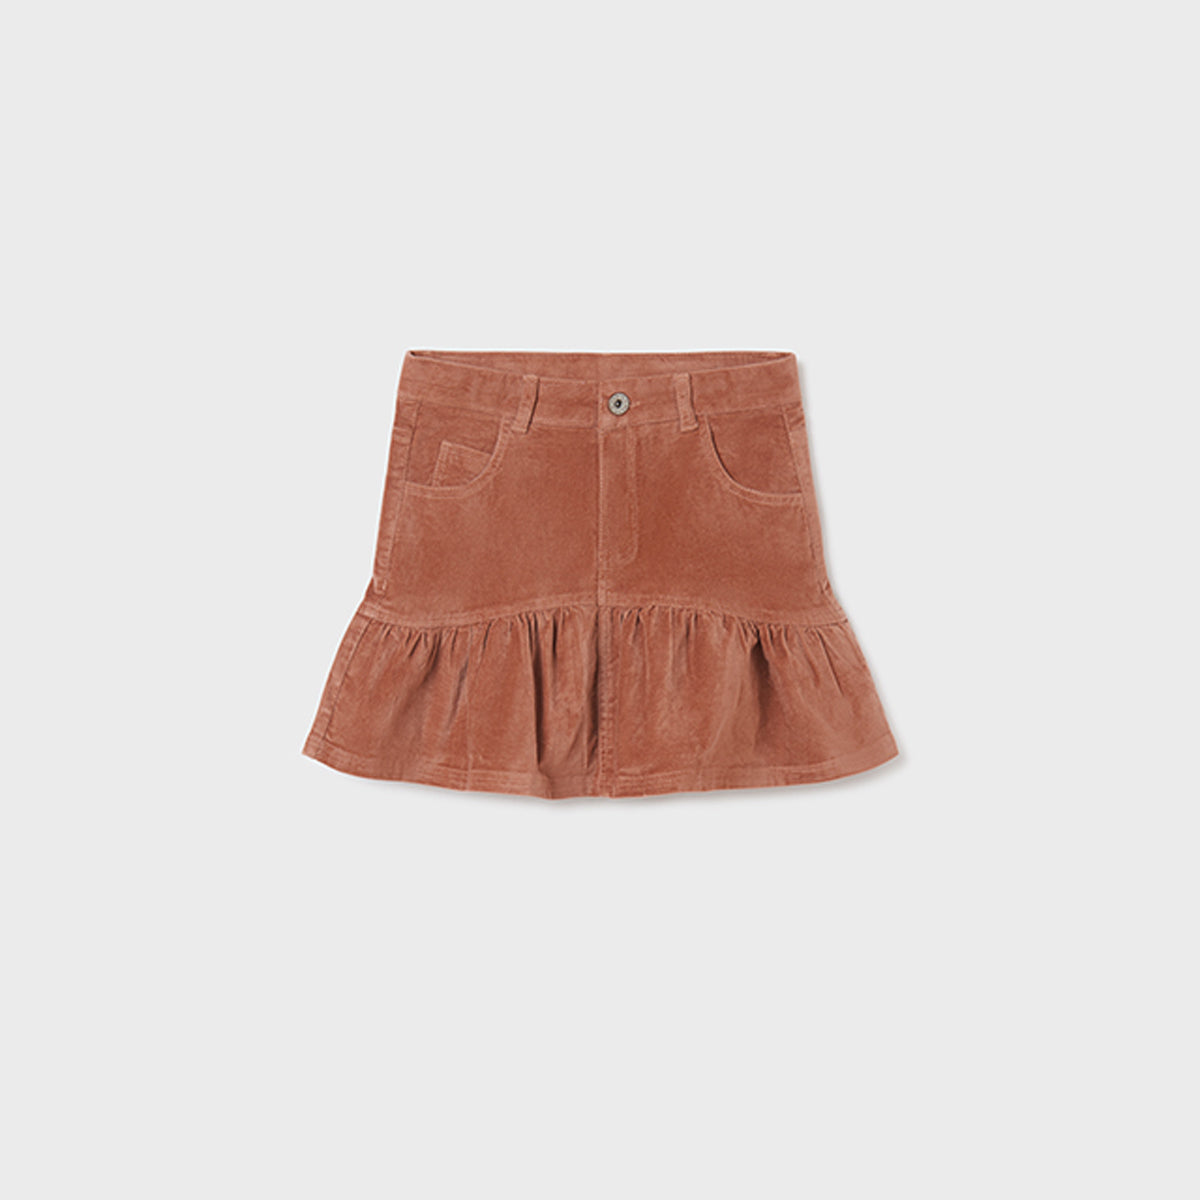 Nude Peach Corduroy Skirt